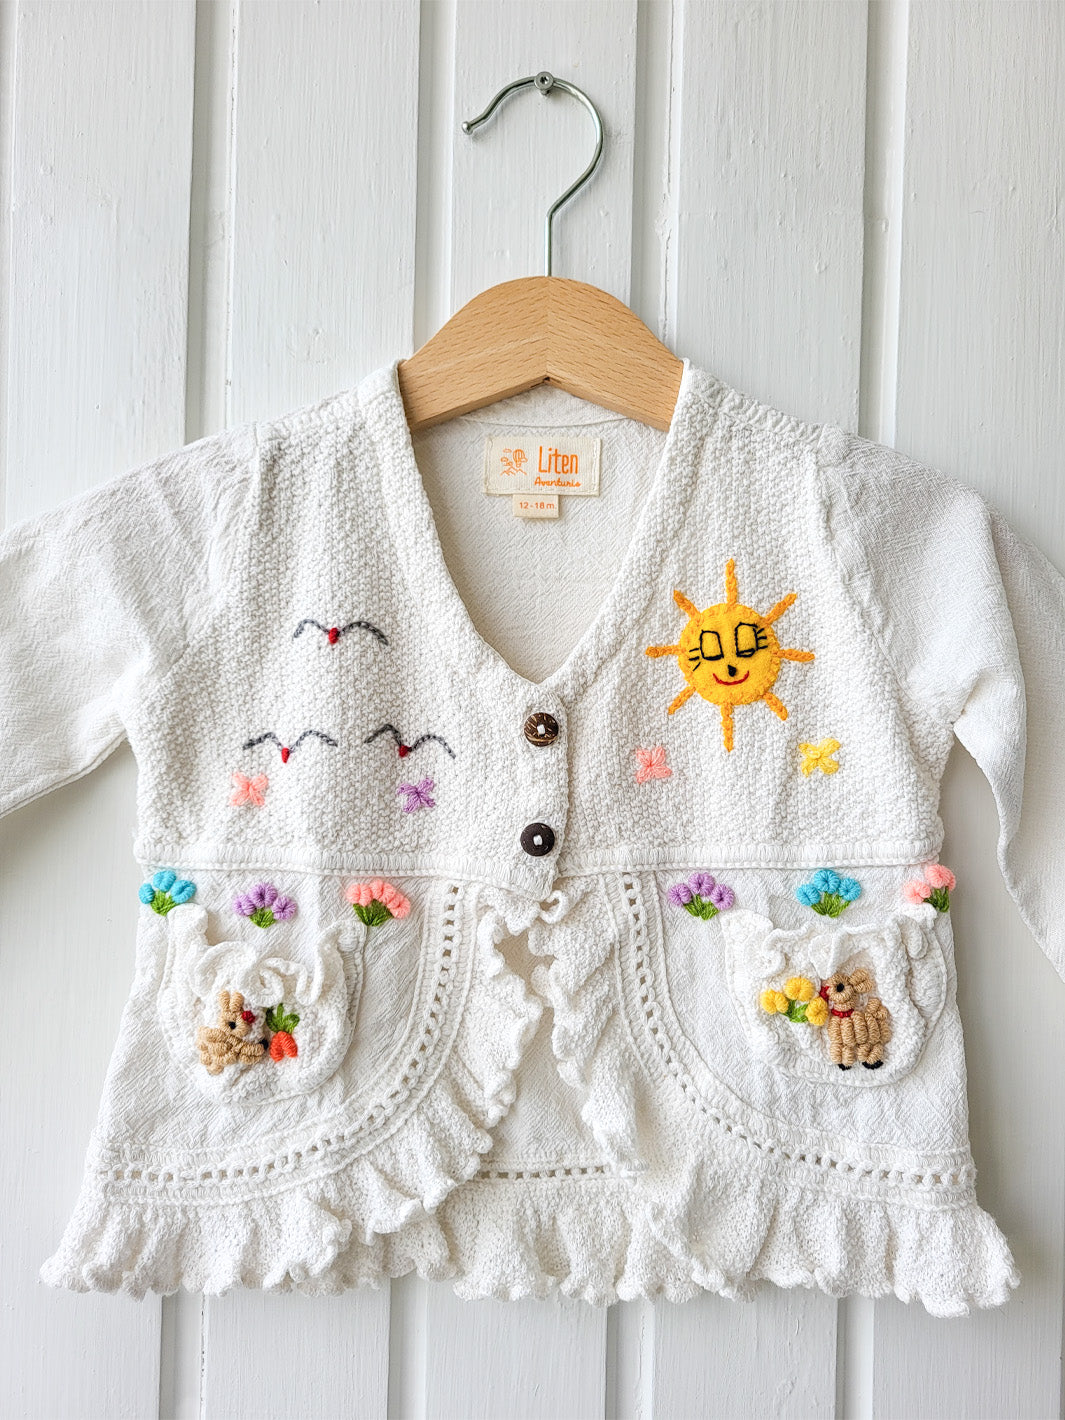 Andrea girl jacket with embroidered little farm animals and colorful flowers | Barnjacka i bomull med små djur och blommor.